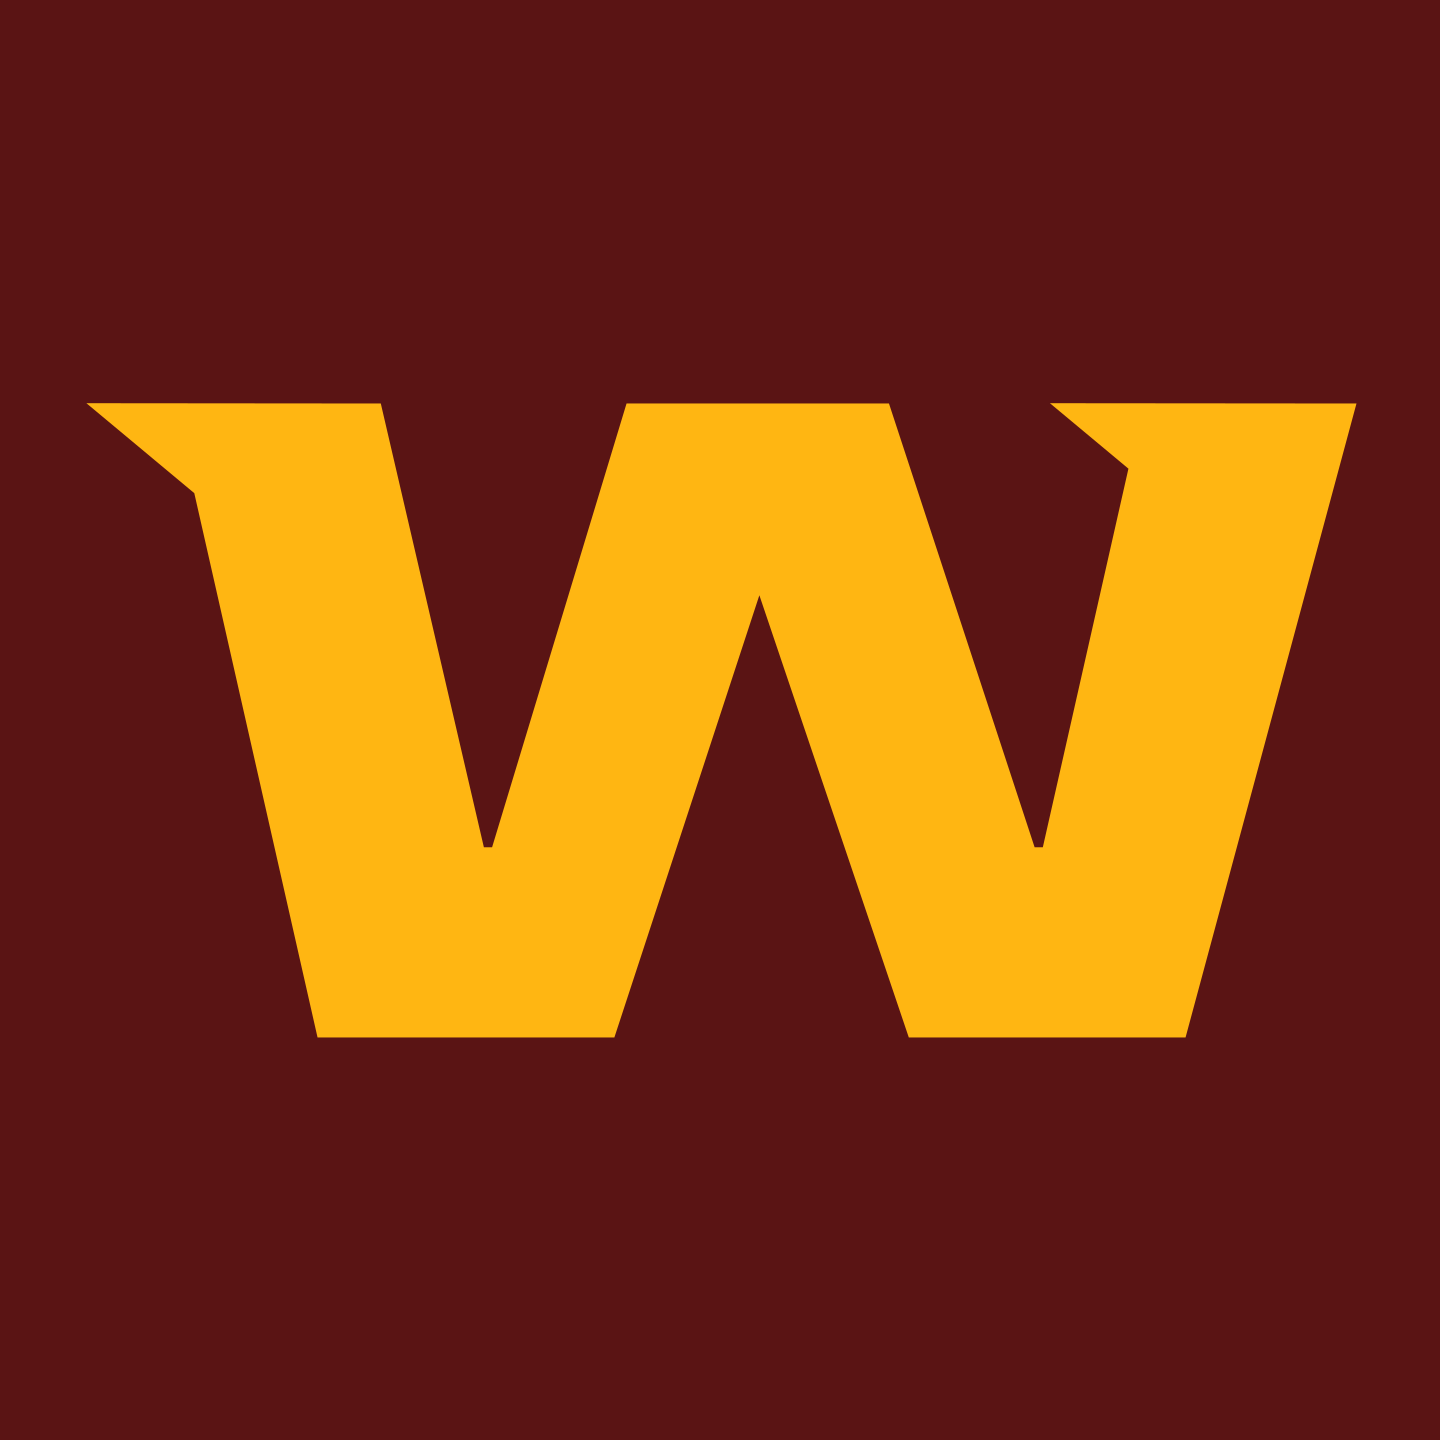 washington football team logo 2 - Washington Football Team Logo